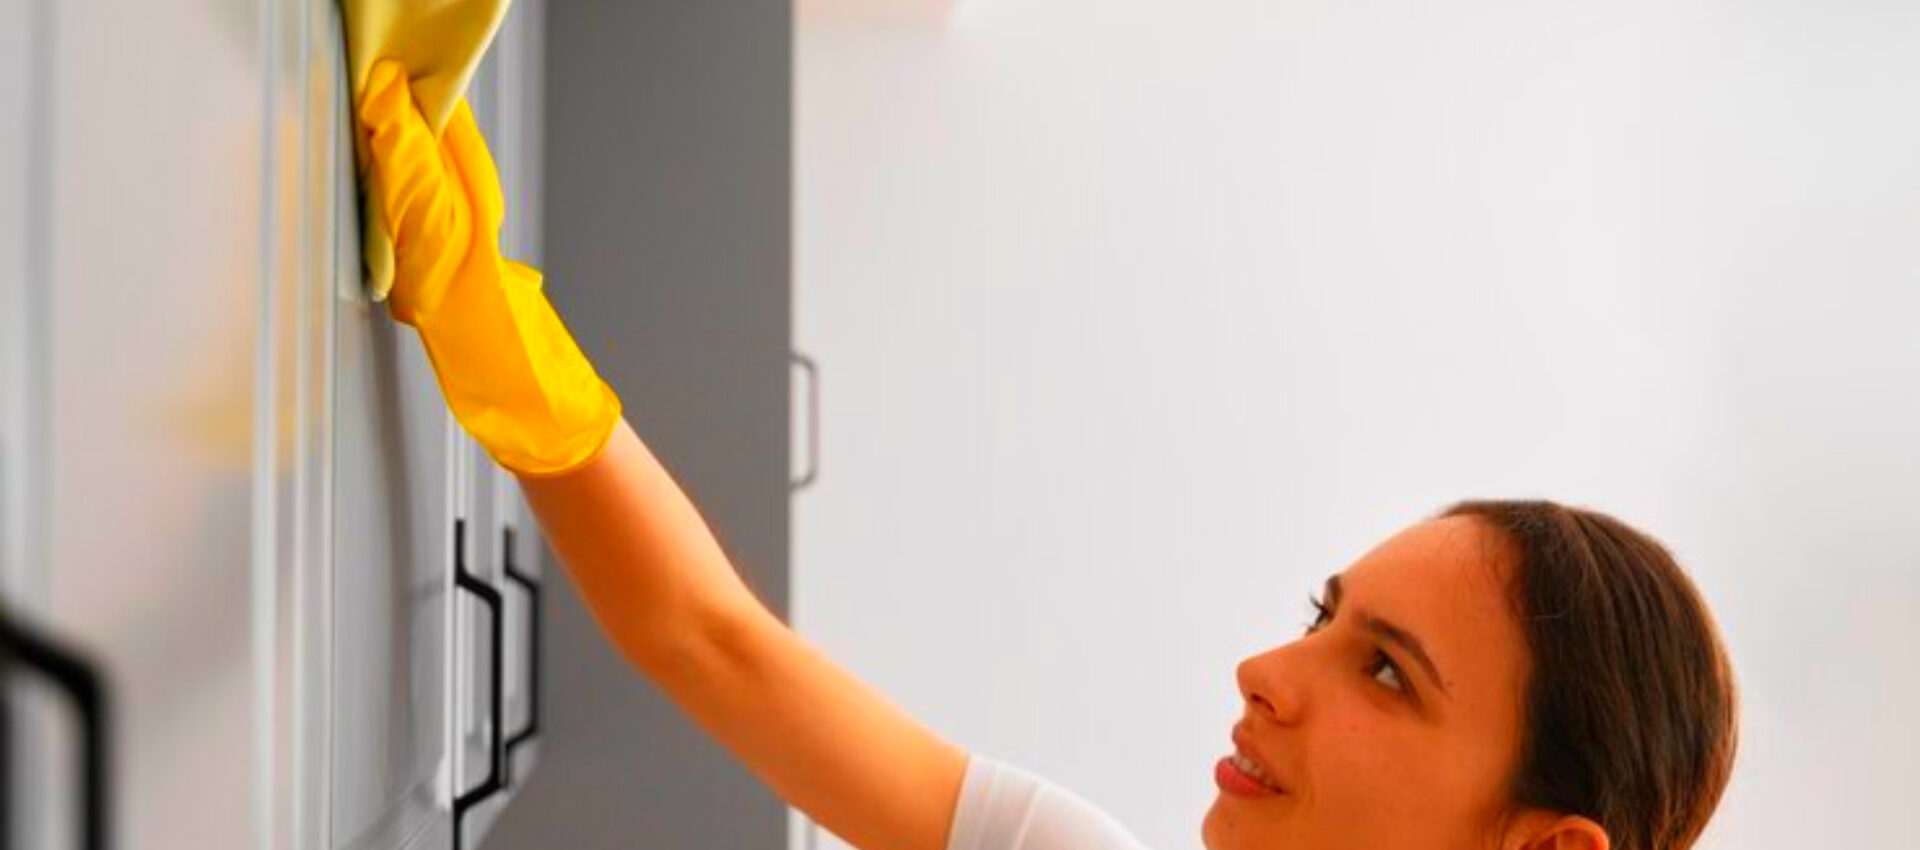 Limpiar paredes lavandina limpieza